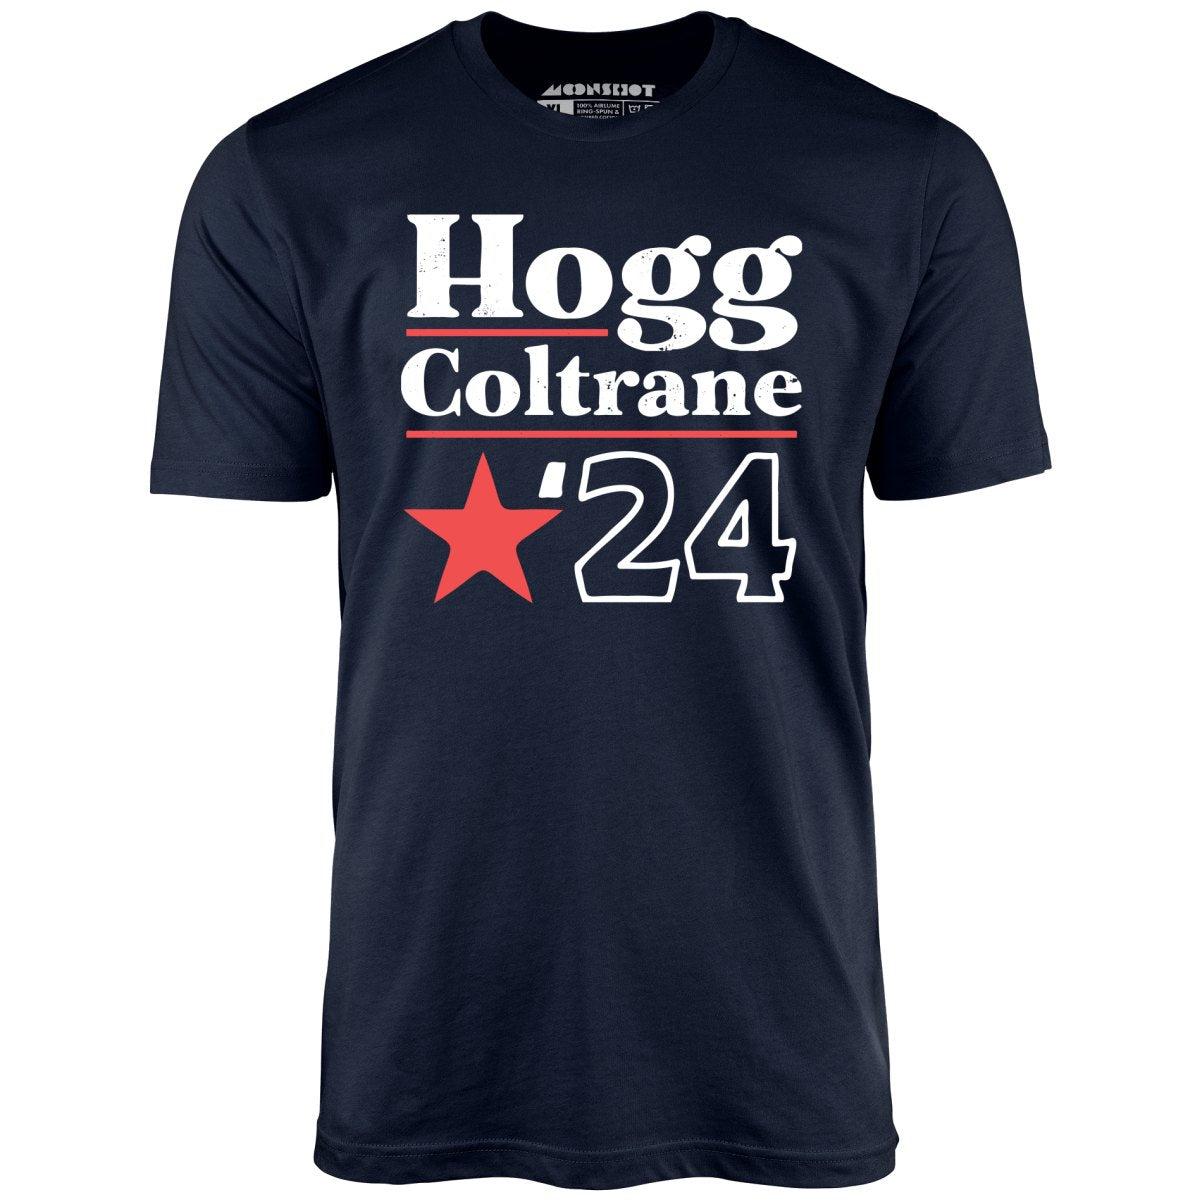 Hogg Coltrane 2024 - Unisex T-Shirt